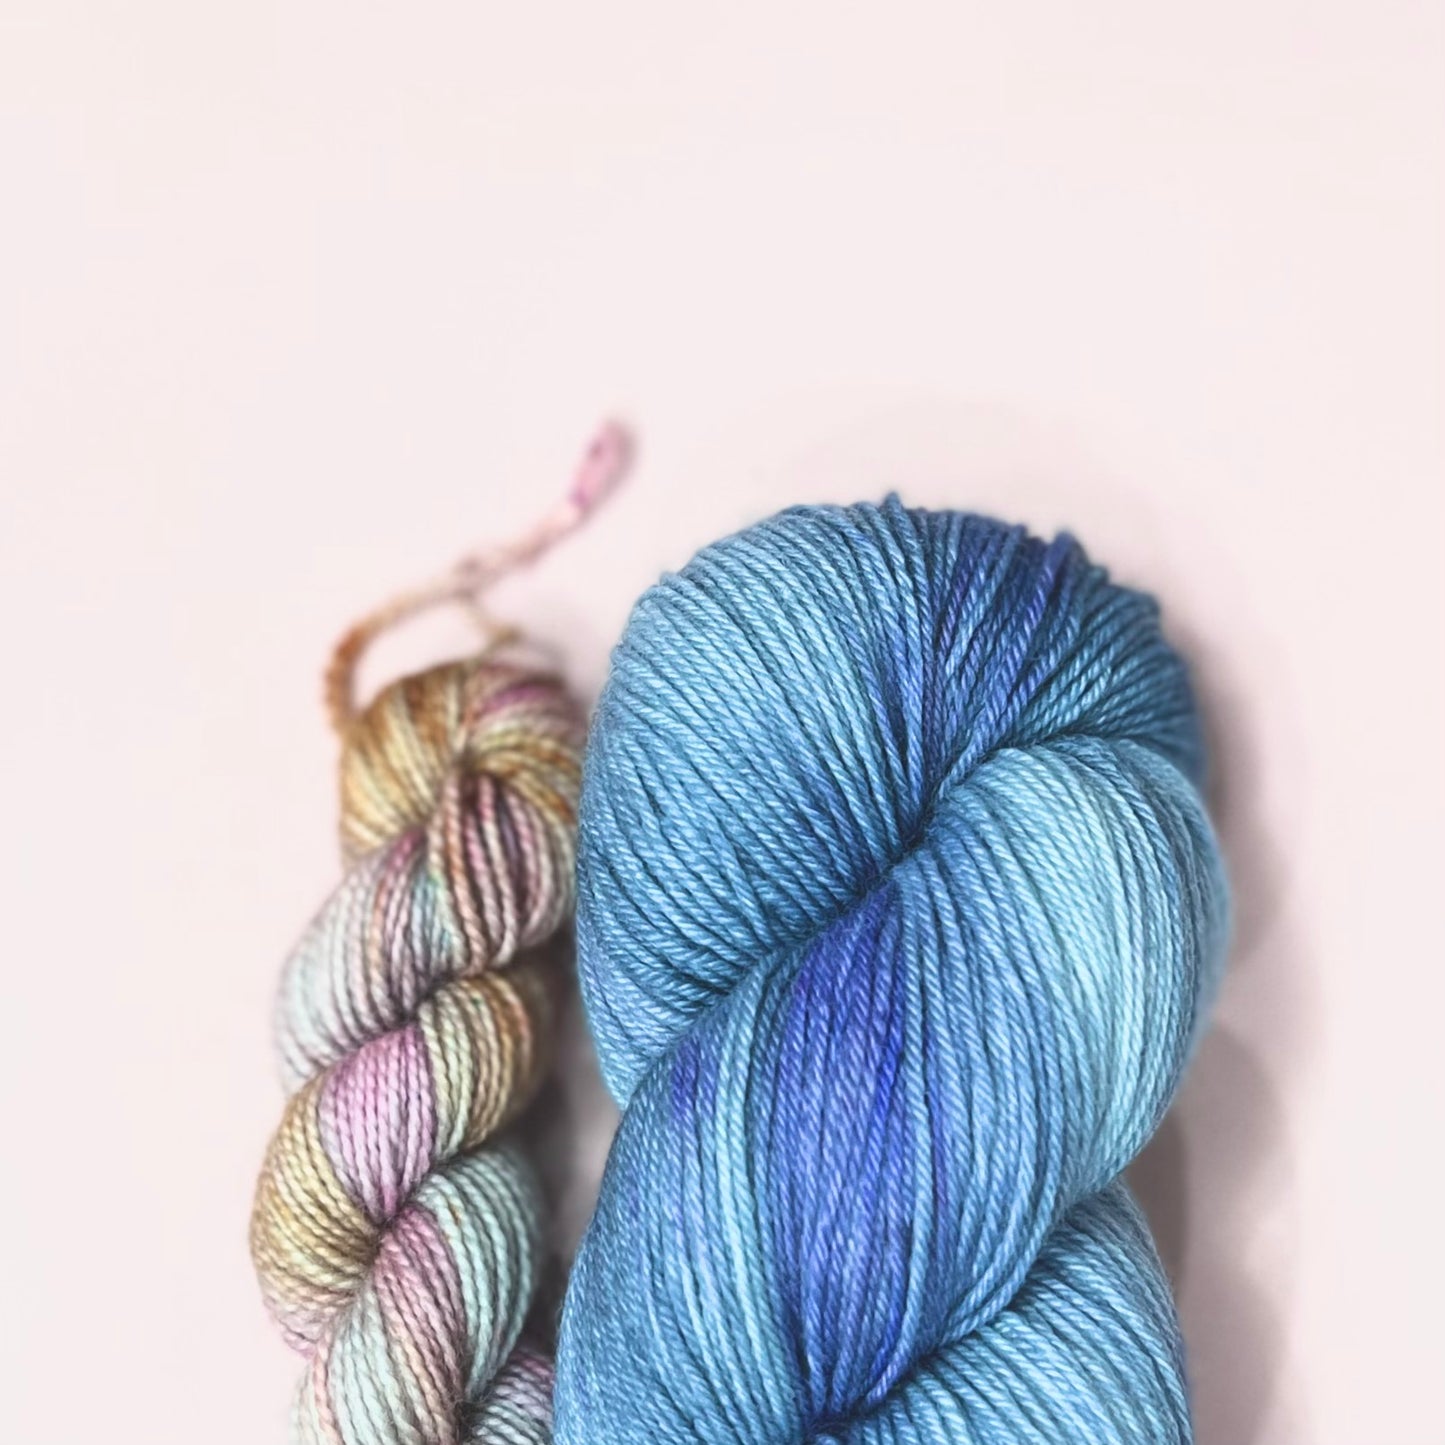 Yarn dye jamming 2.0